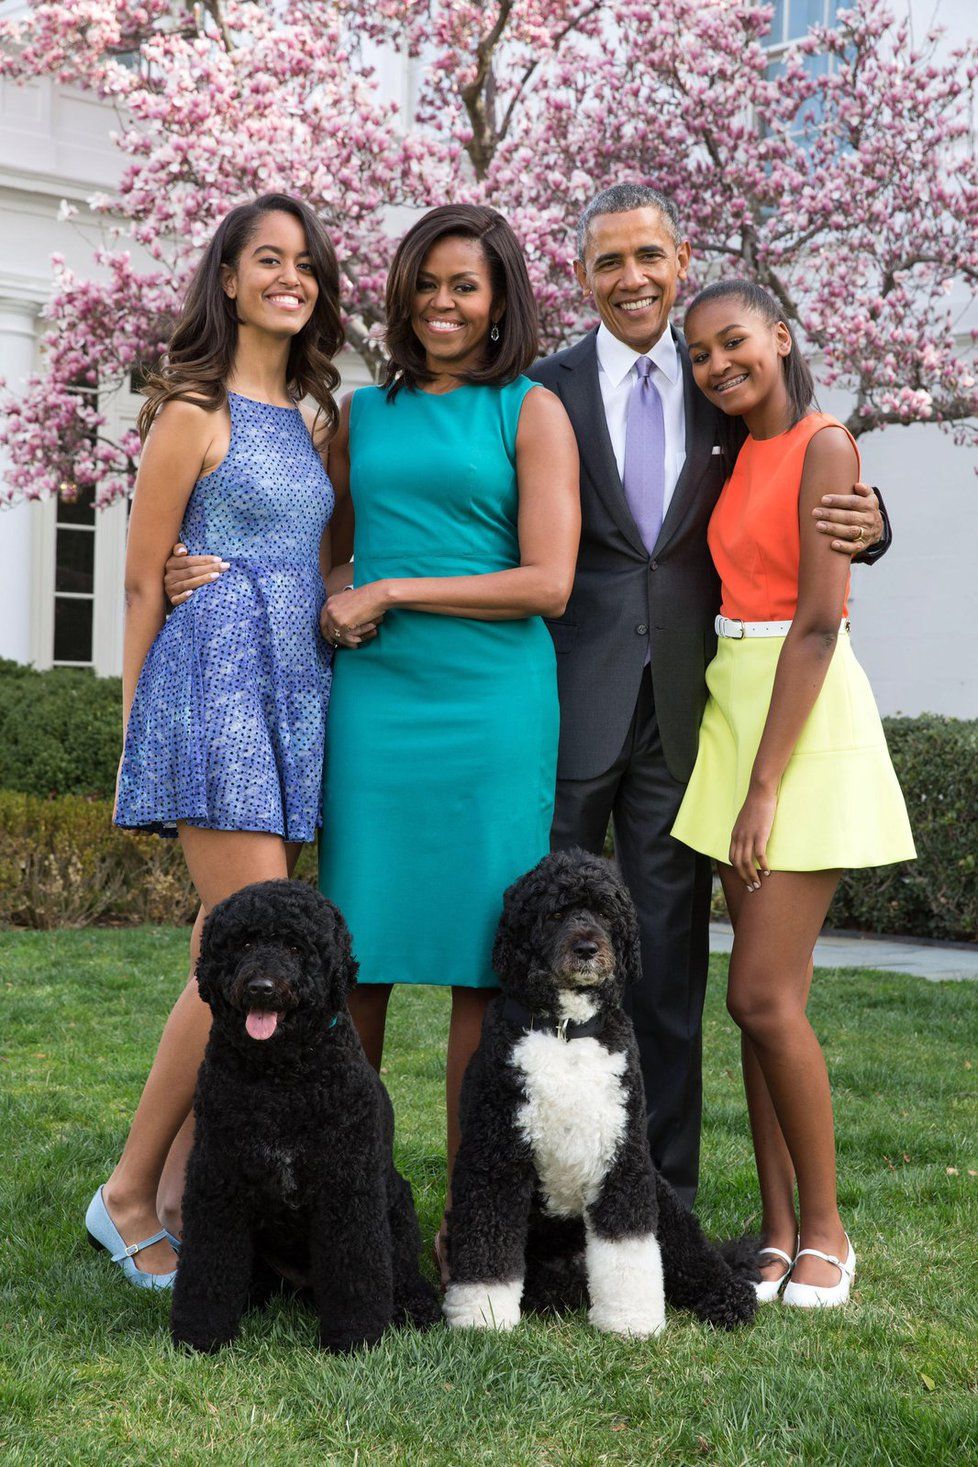 Rodina Obamových: (zleva) Malla, Michelle, Barrack a Sasha, dole pejsci (zleva): Bo a Sunny.